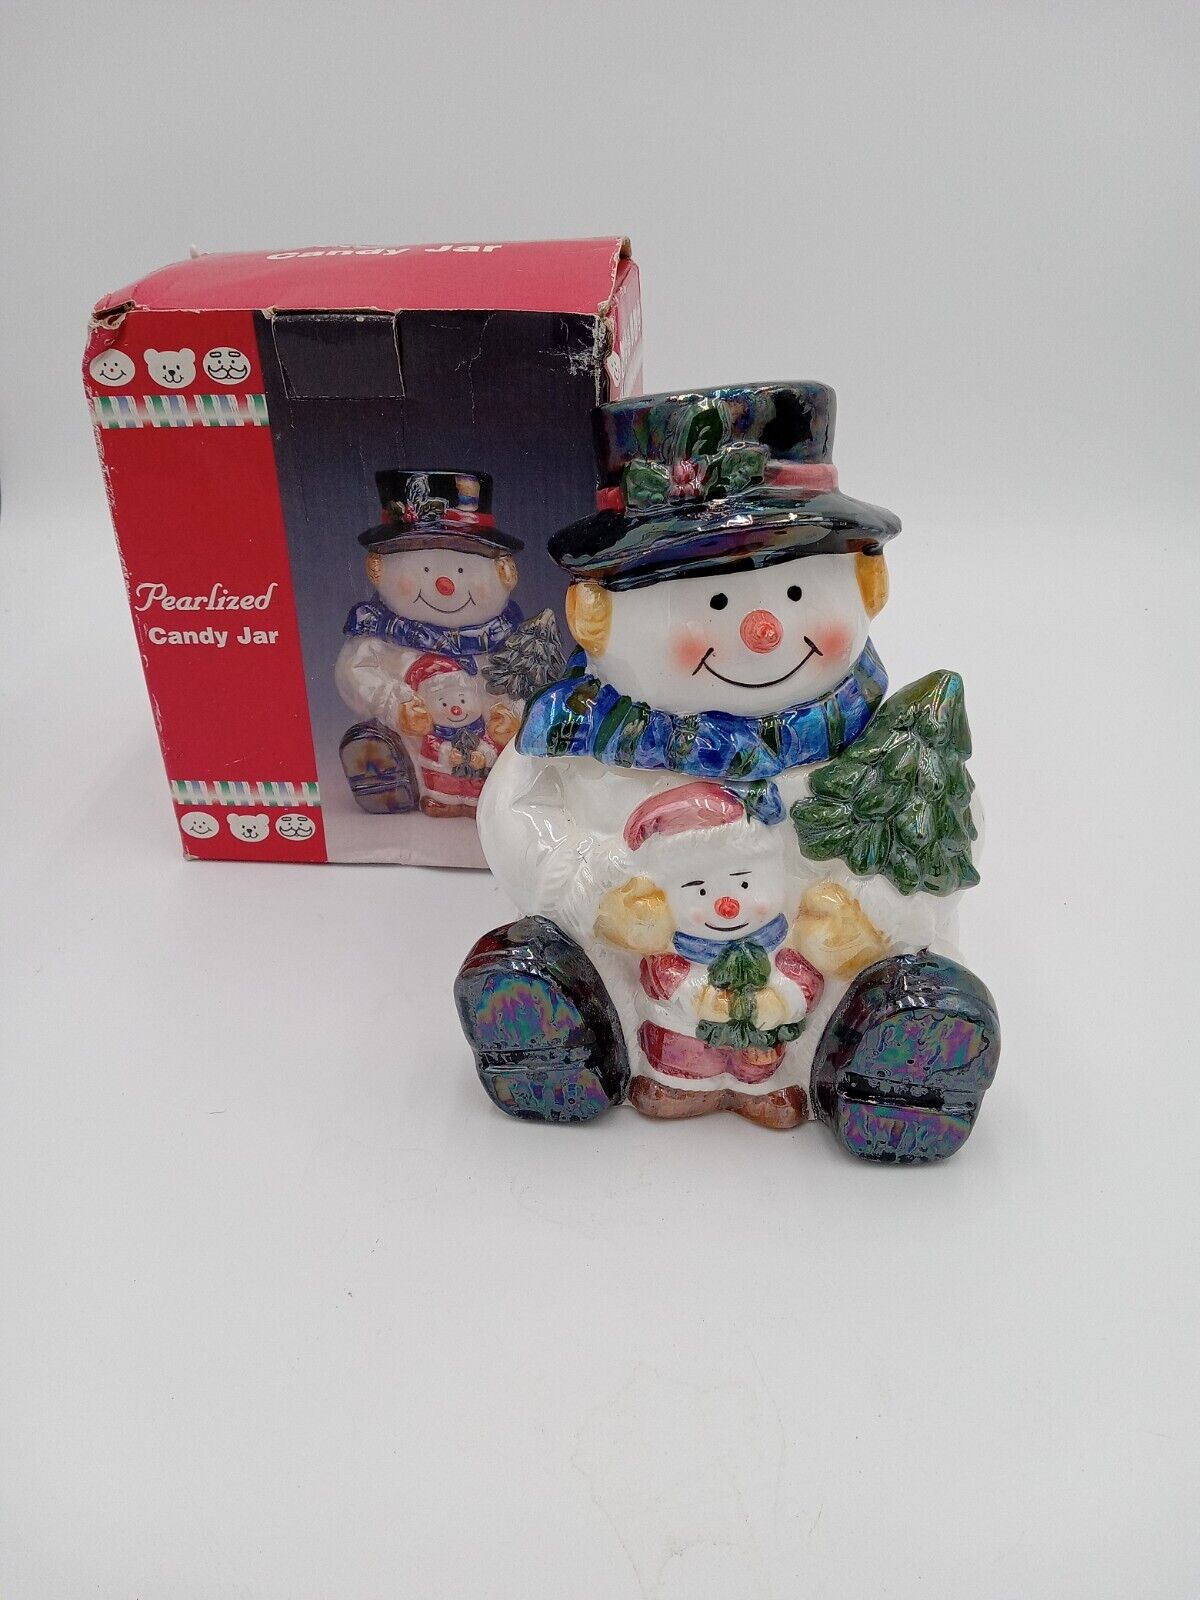 Pearlized Snowman Candy Jar with Original Box